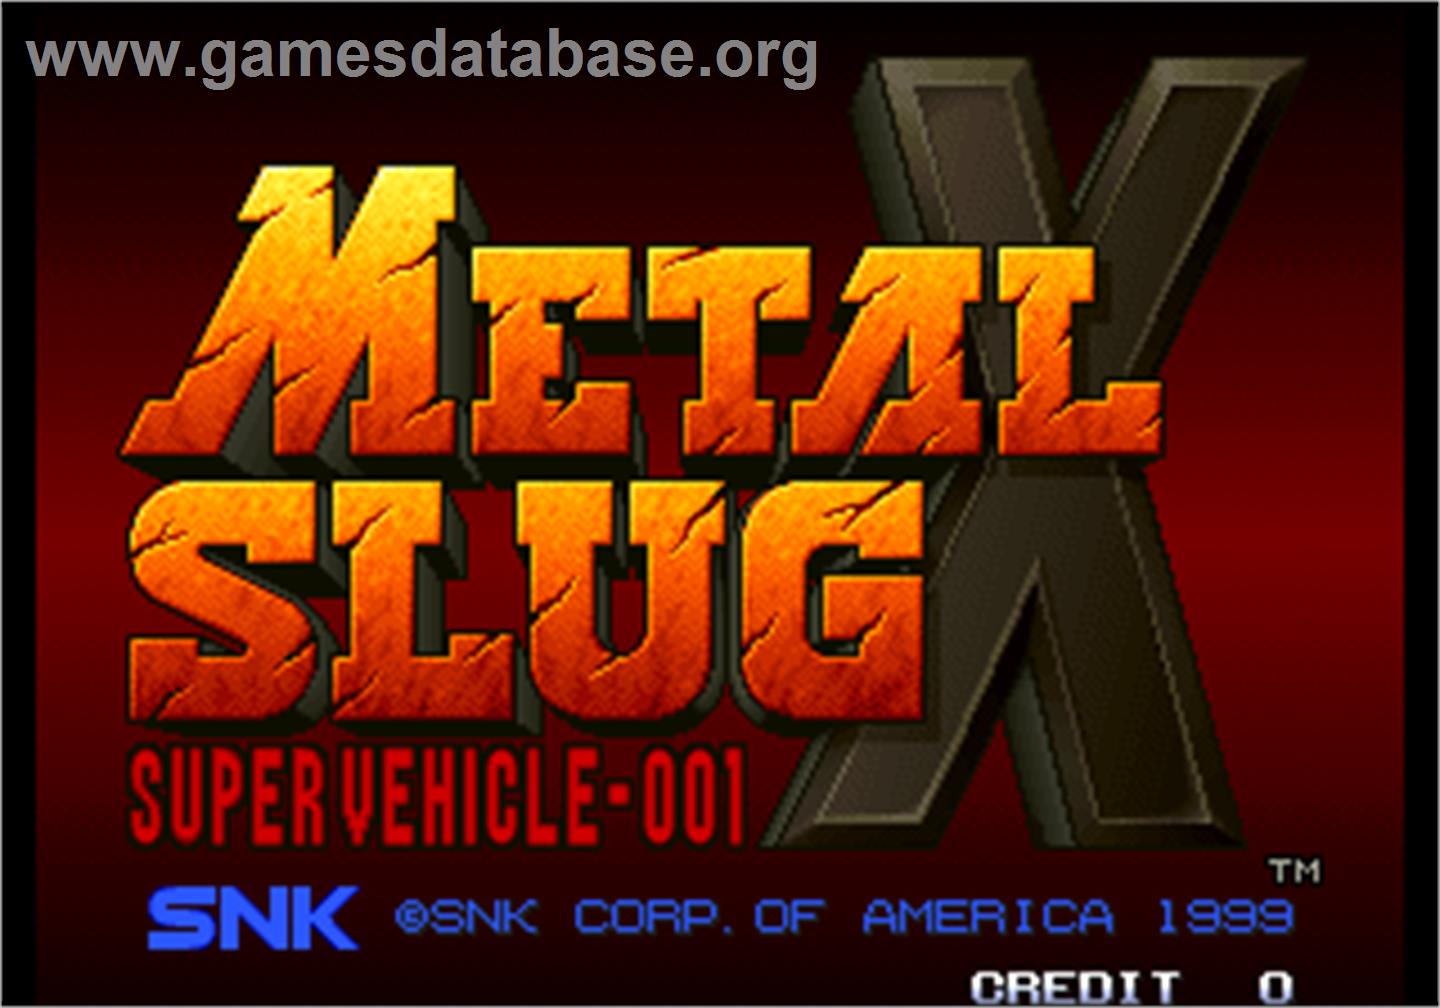 Metal Slug X - Super Vehicle-001 - Arcade - Artwork - Title Screen